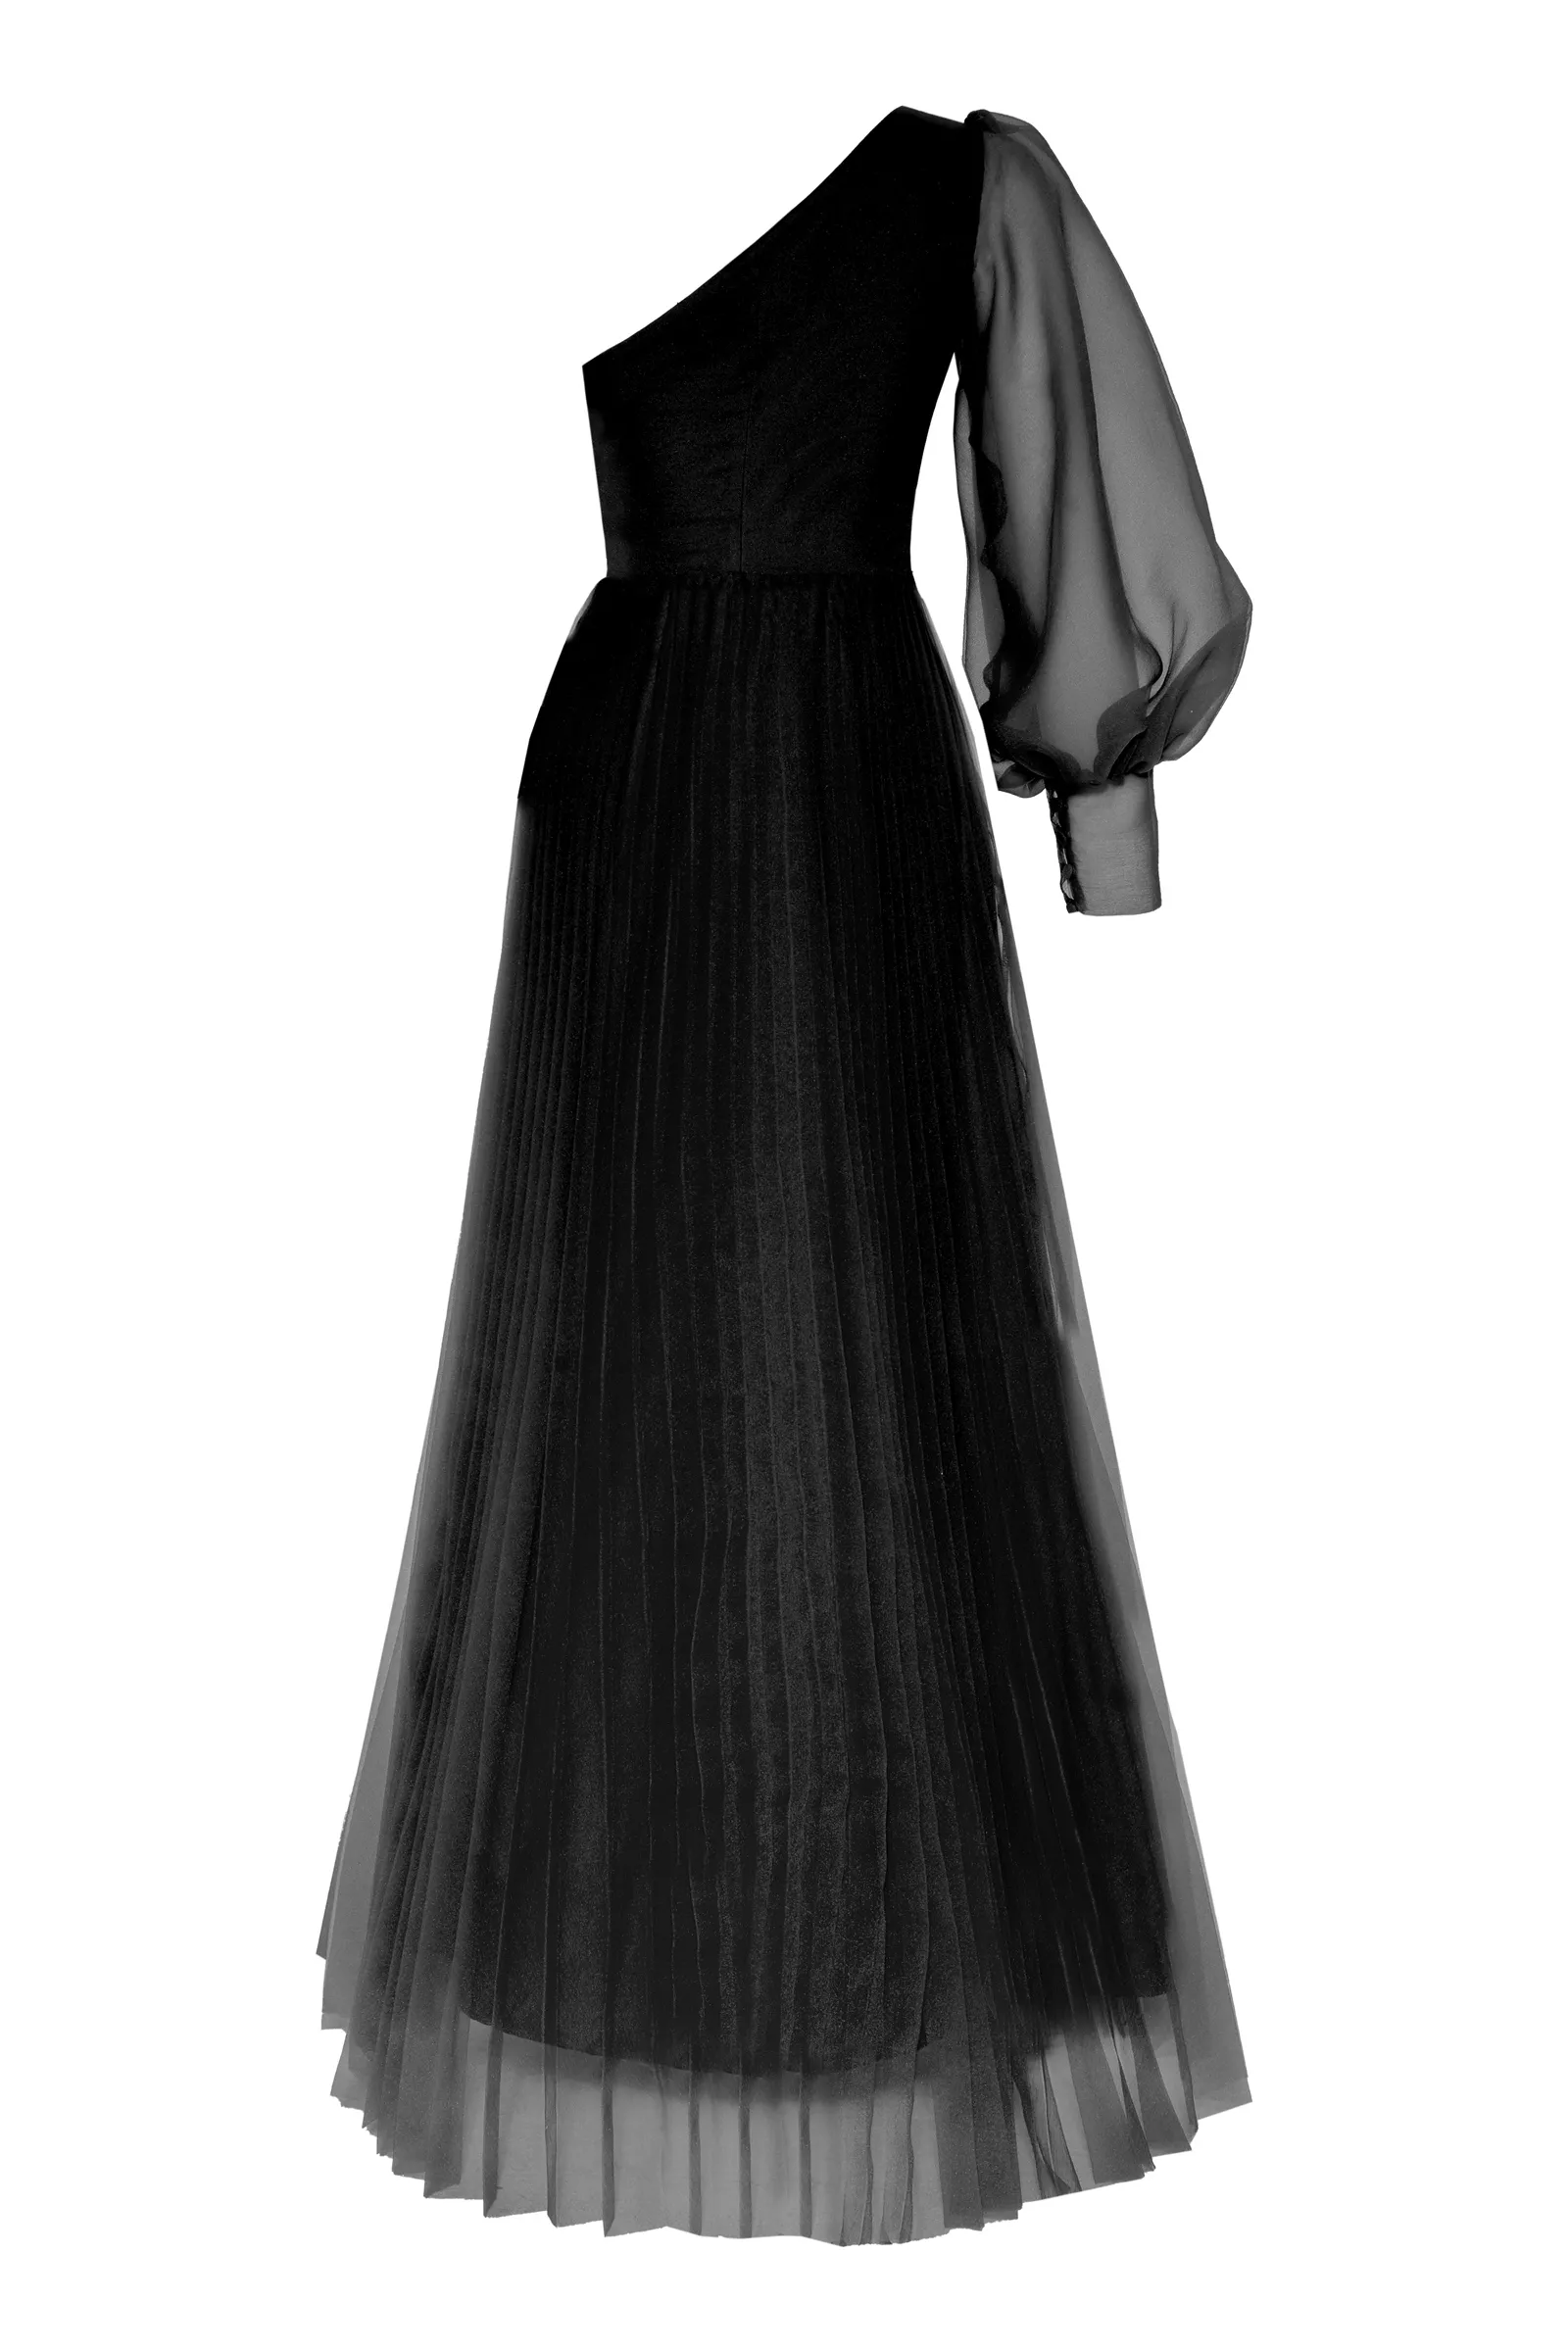 Black tulle one arm long dress